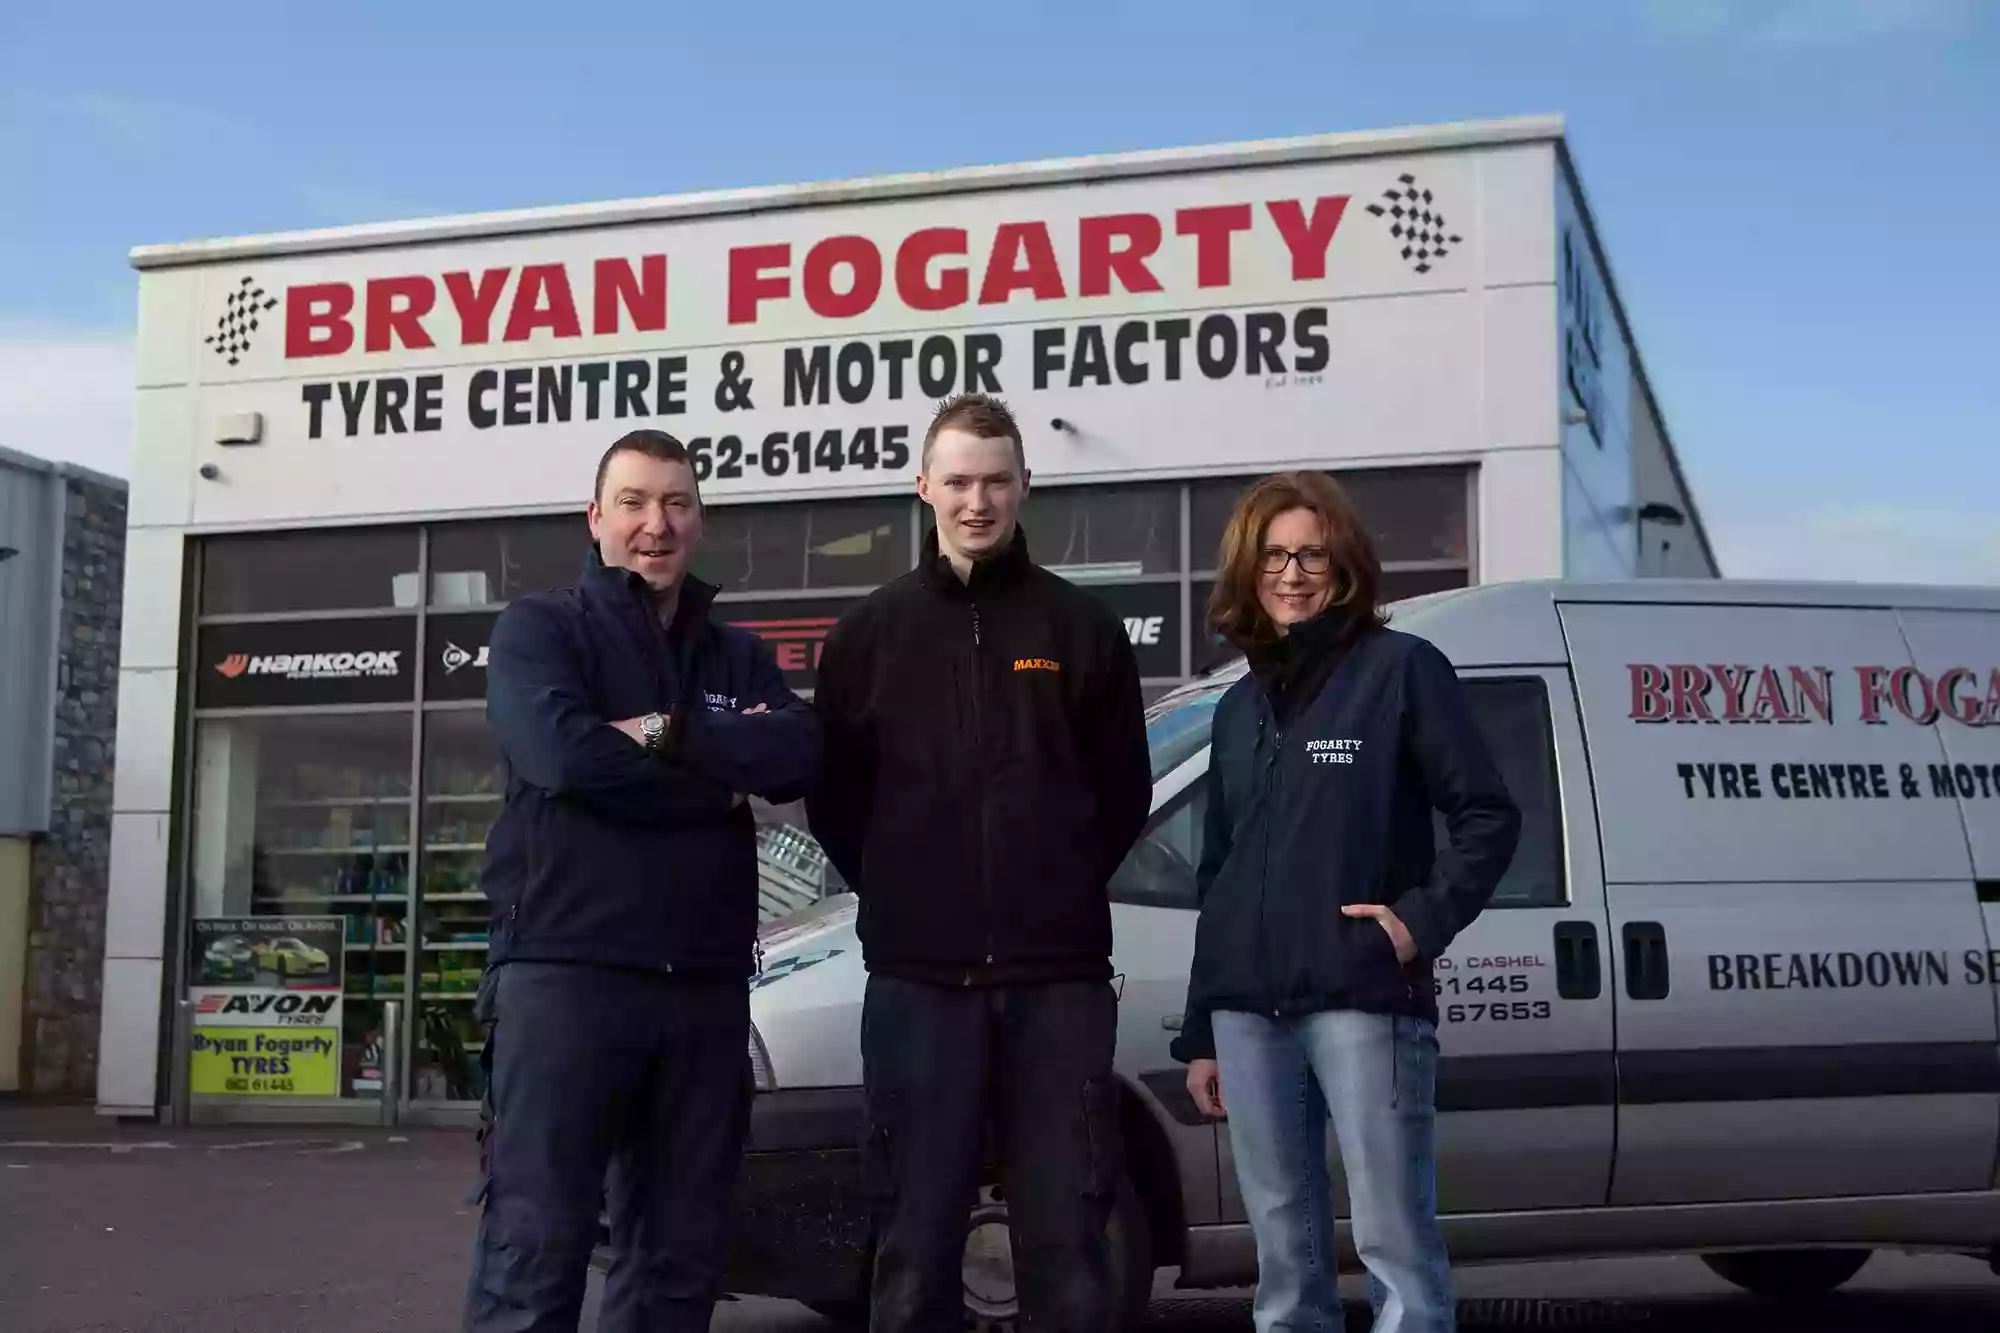 Bryan Fogarty Tyres and Motor Factors